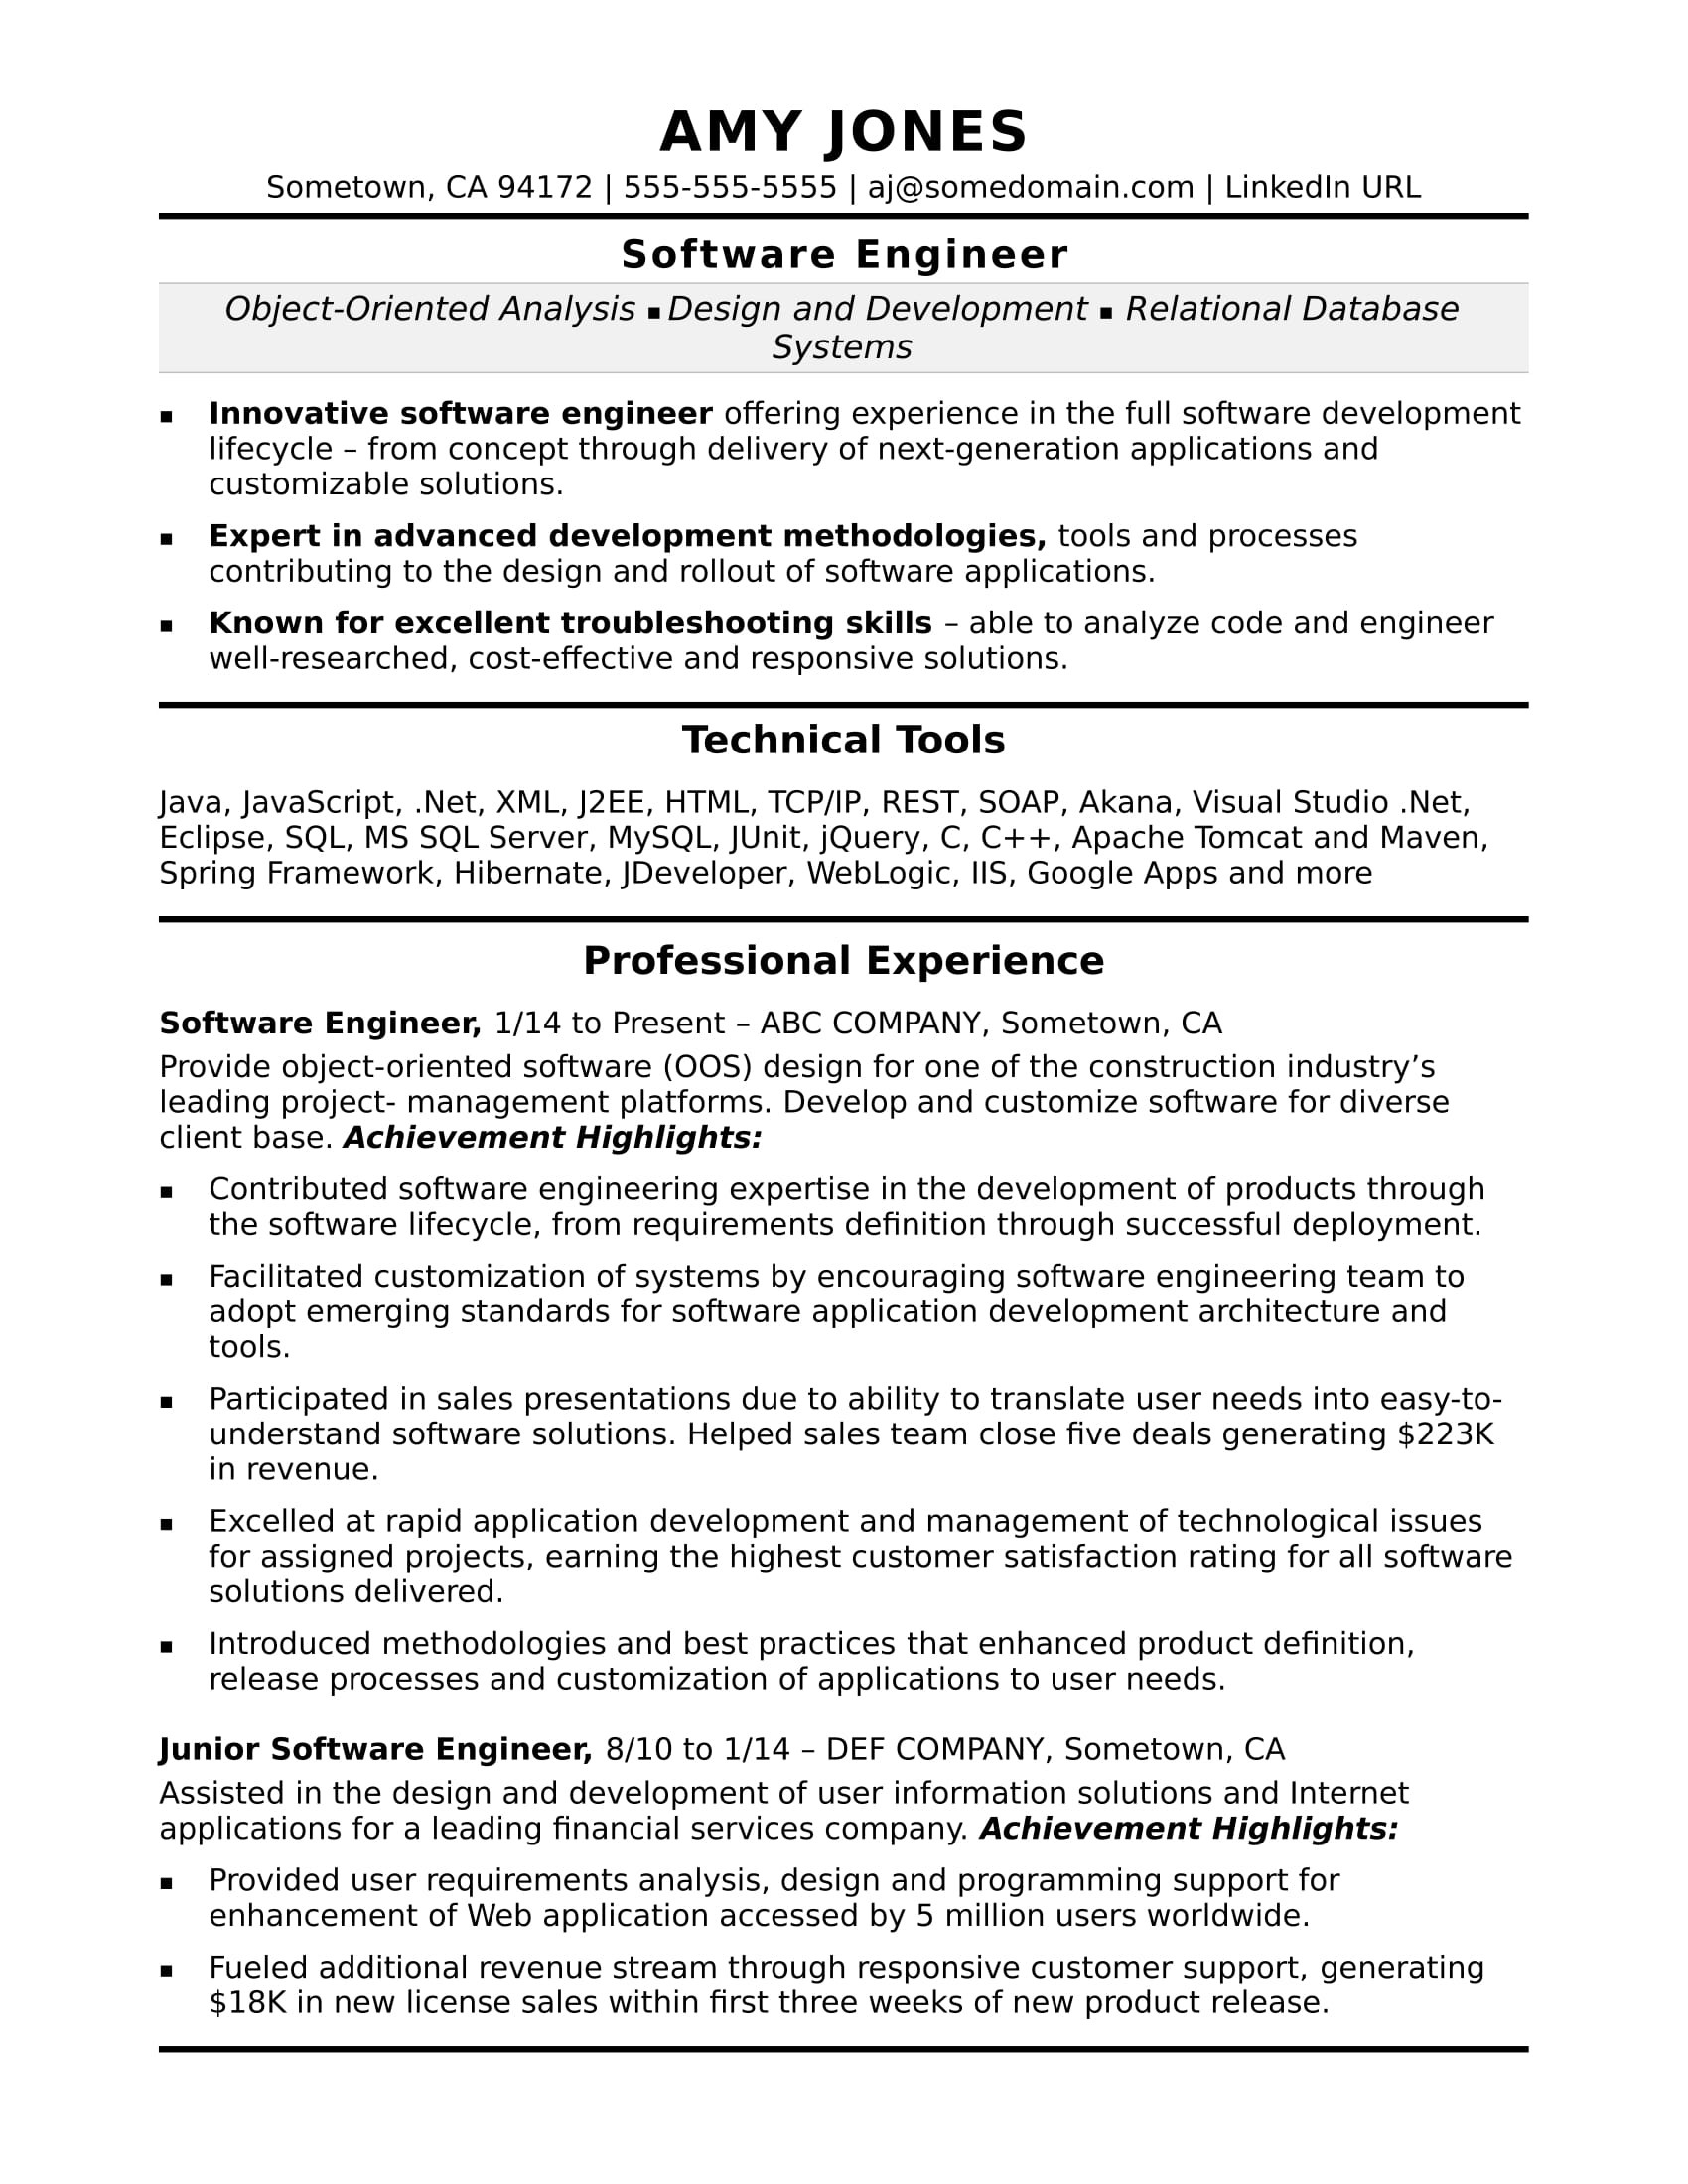 Sample Resume for Experienced Application Developer software Engineer Resume Monster.com